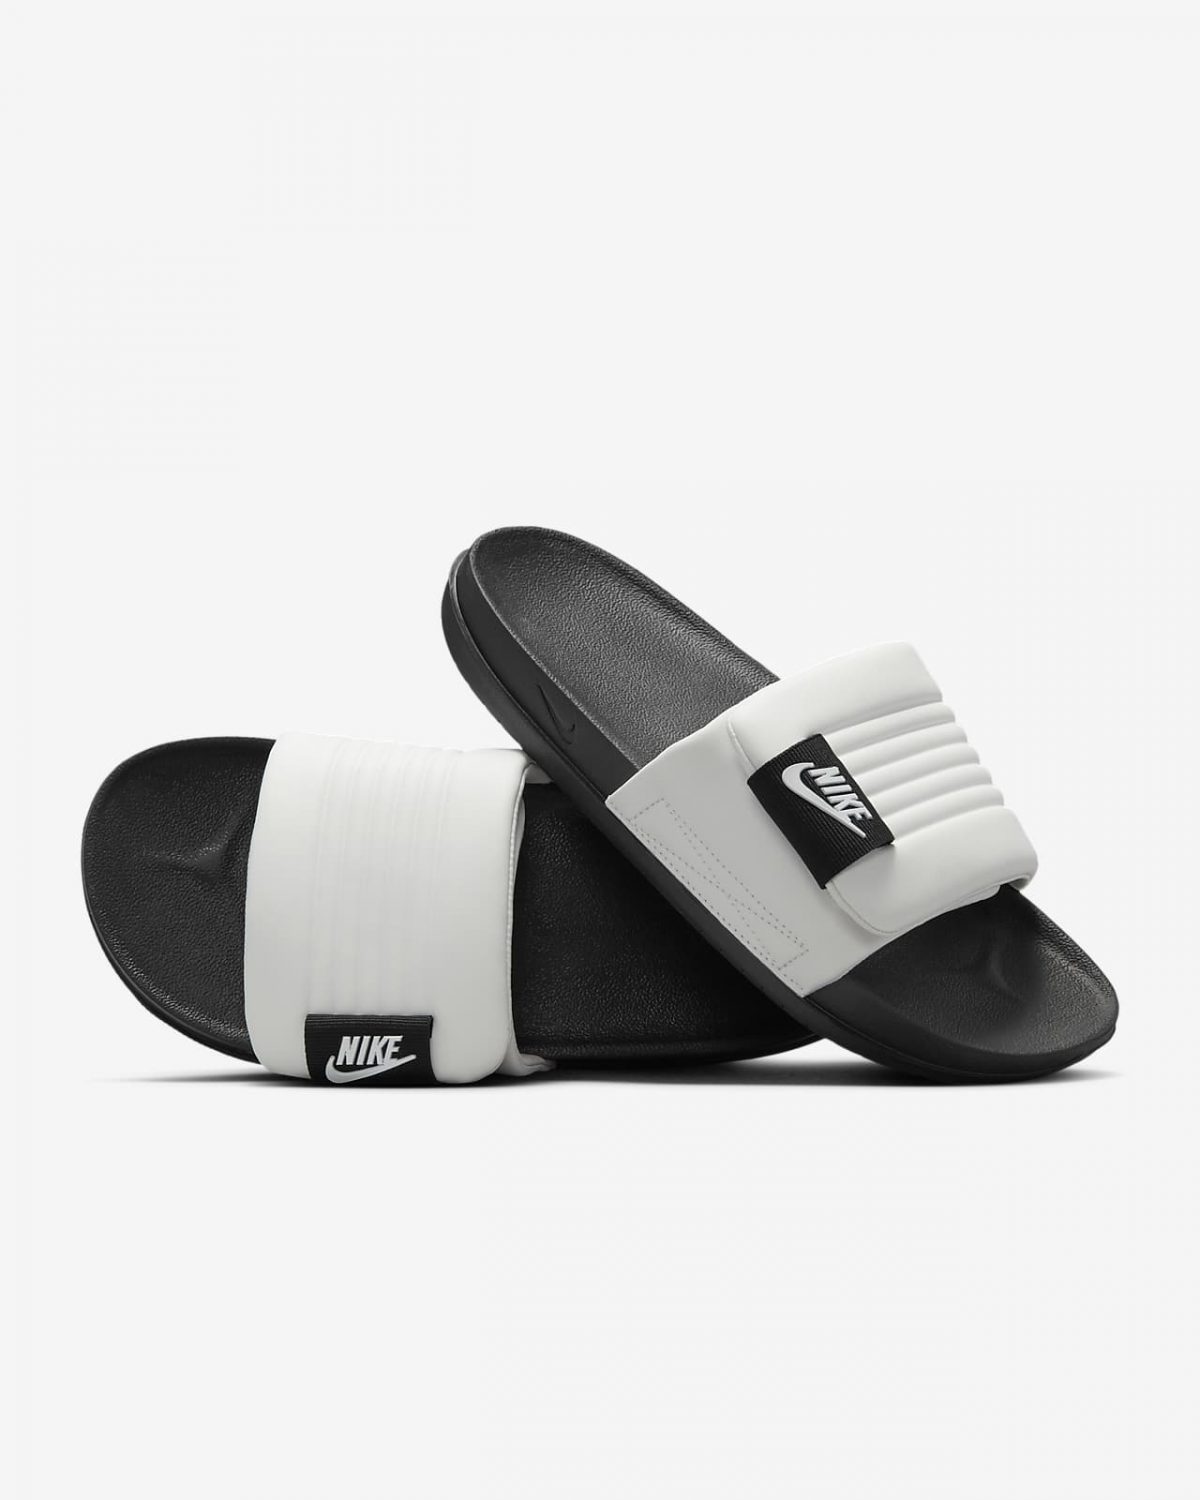 Мужские сланцы Nike Offcourt Adjust Slide фото